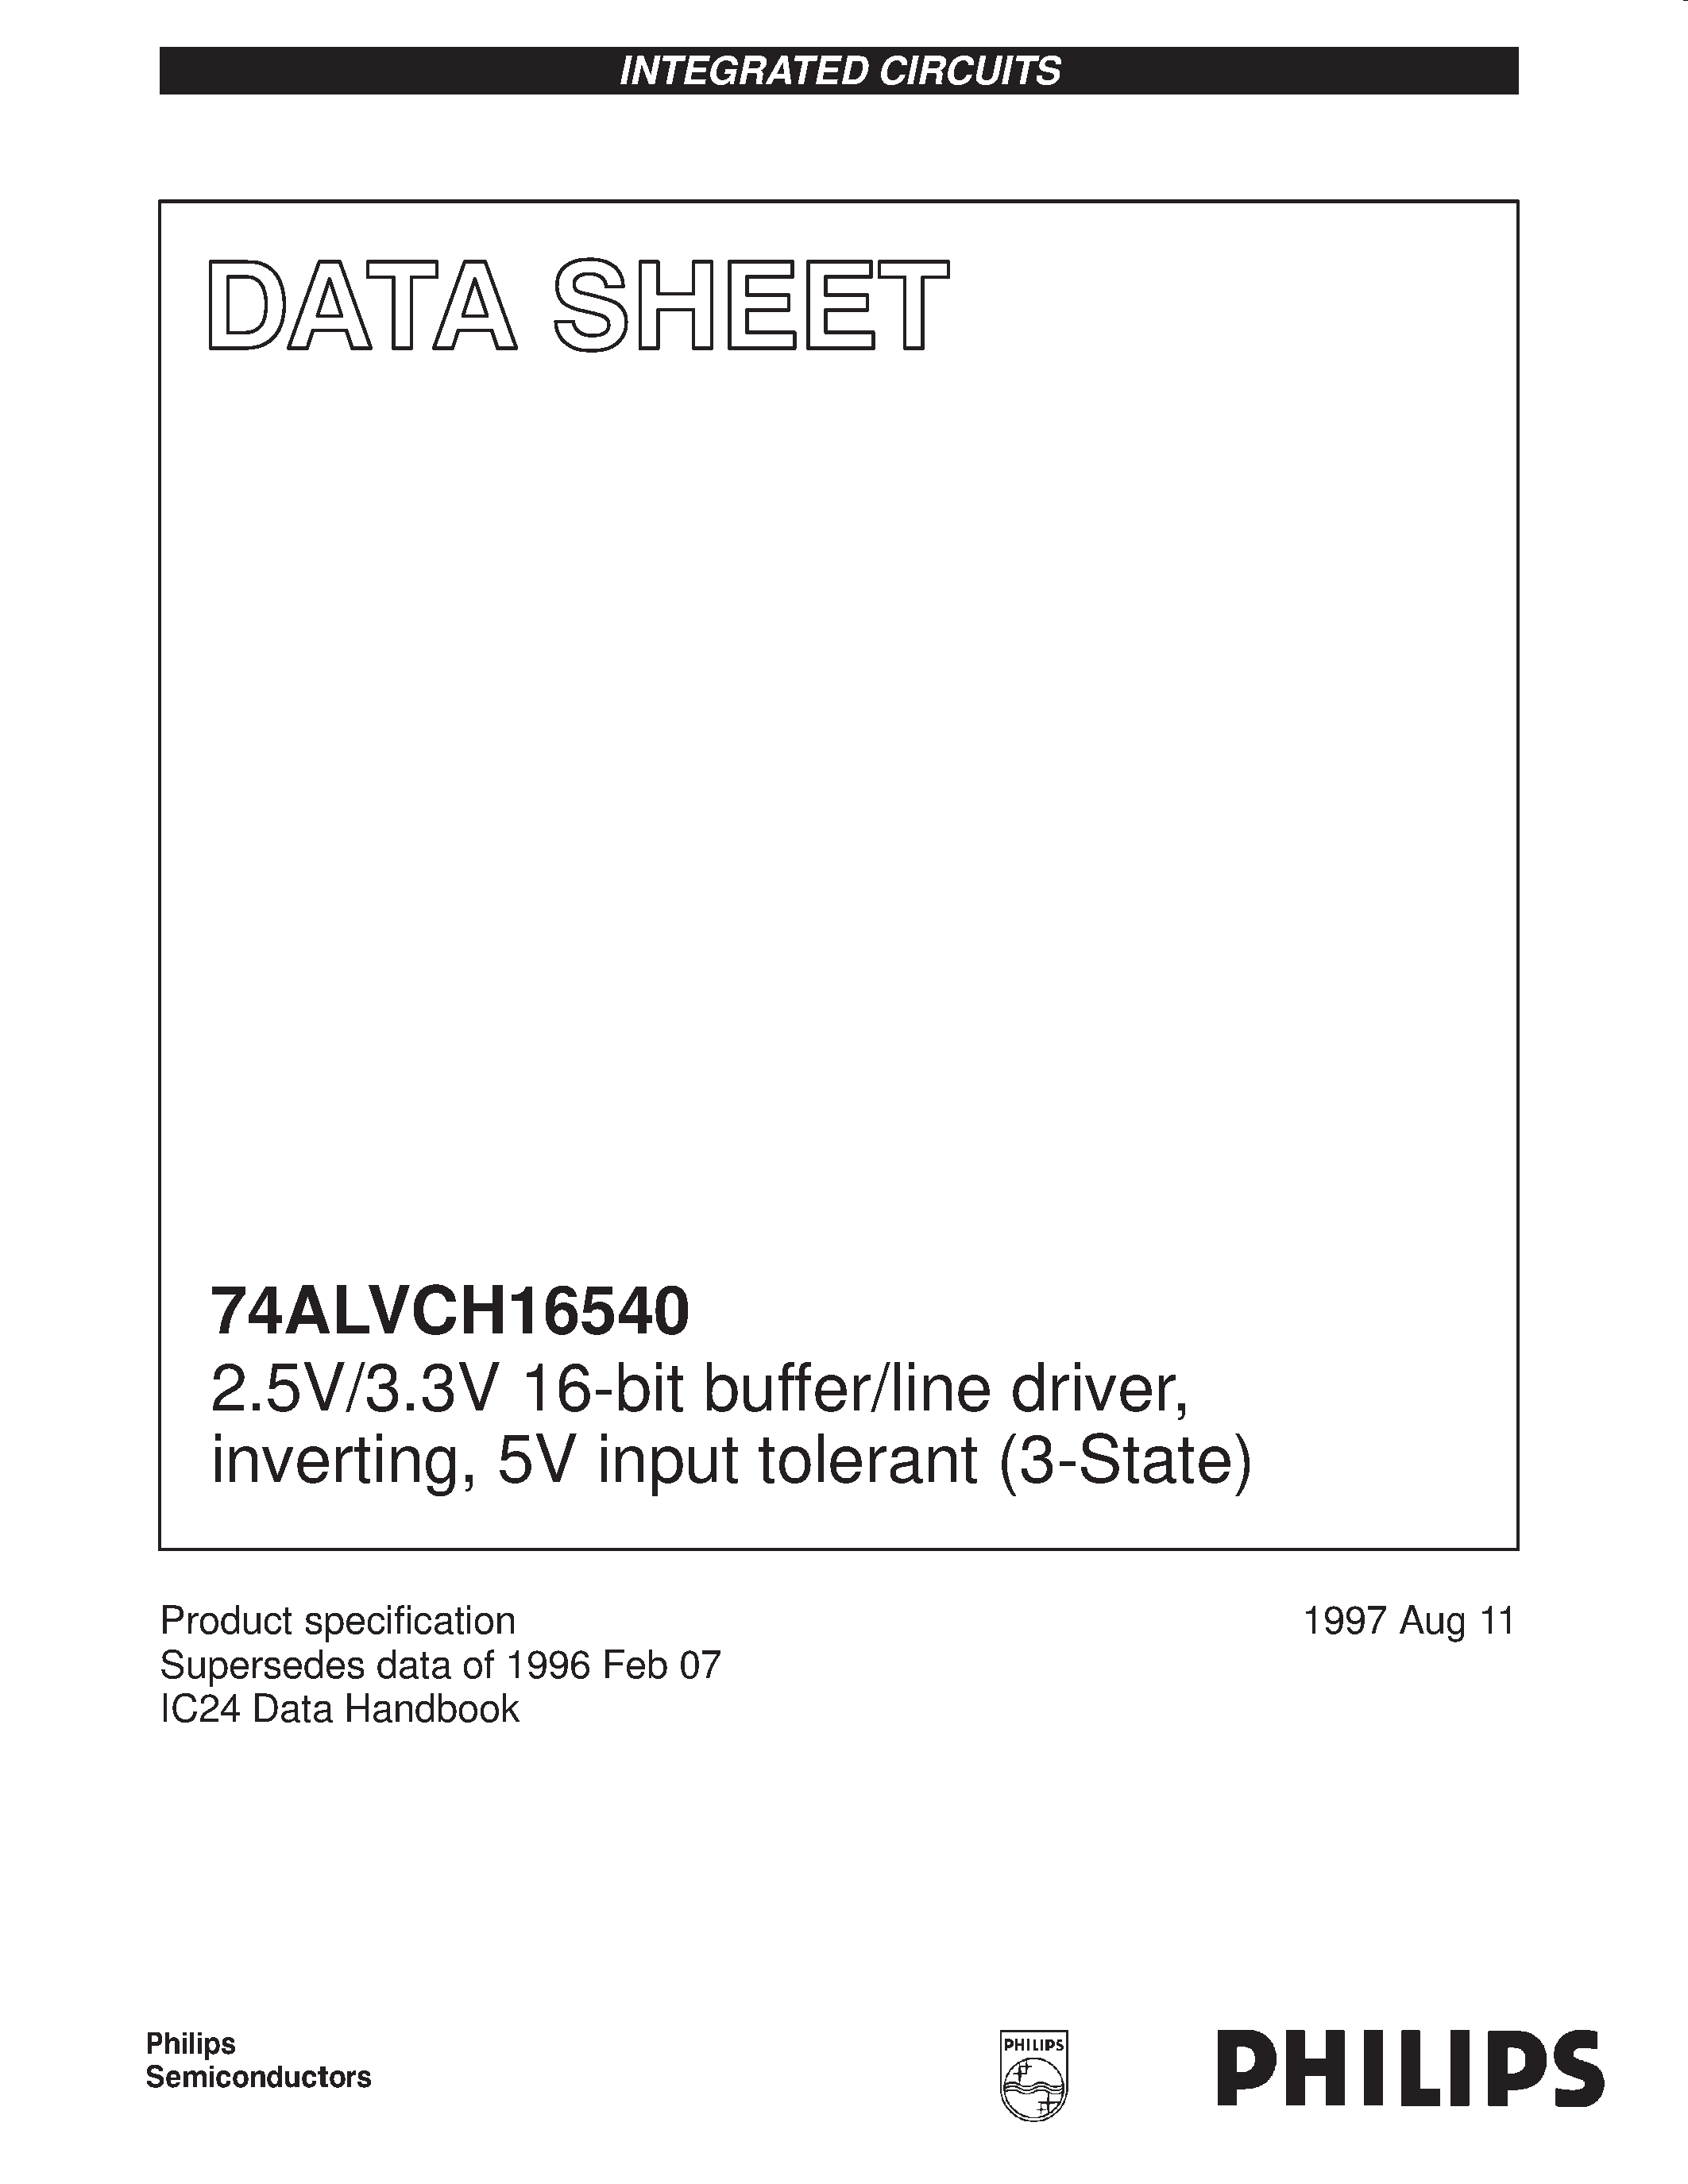 Datasheet 74ALVCH16540 - 2.5V/3.3V 16-bit buffer/line driver/ inverting/ 5V input tolerant 3-State page 1